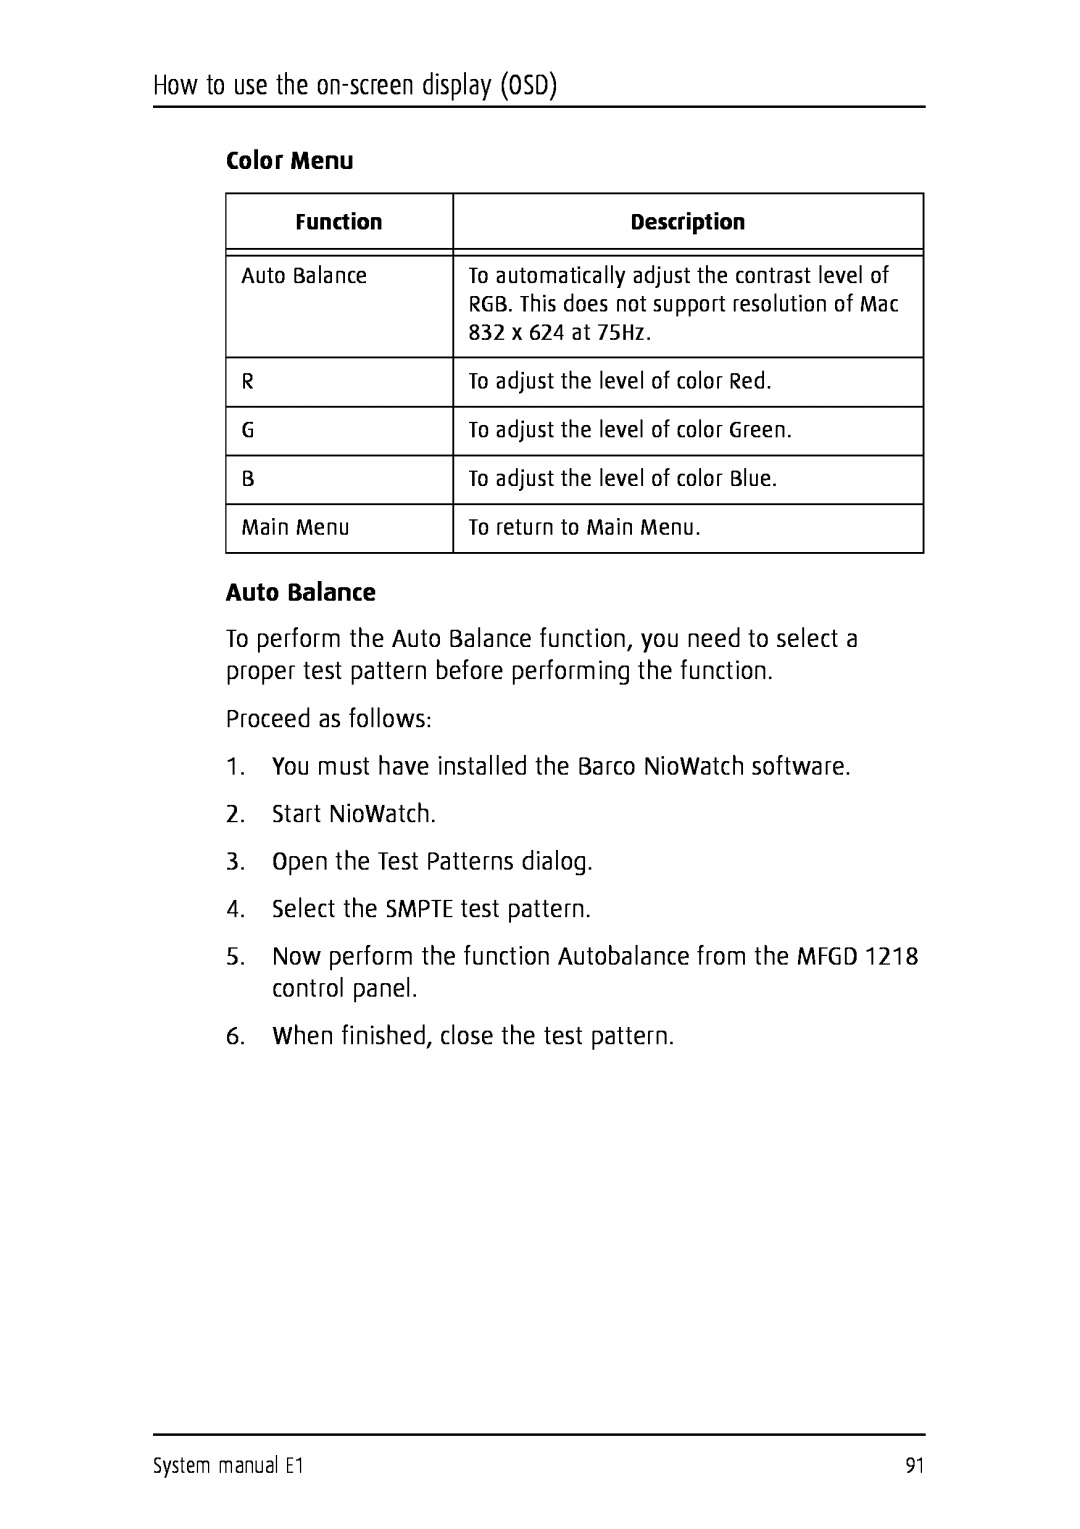 Barco E1 manual Color Menu, Auto Balance, How to use the on-screen display OSD 